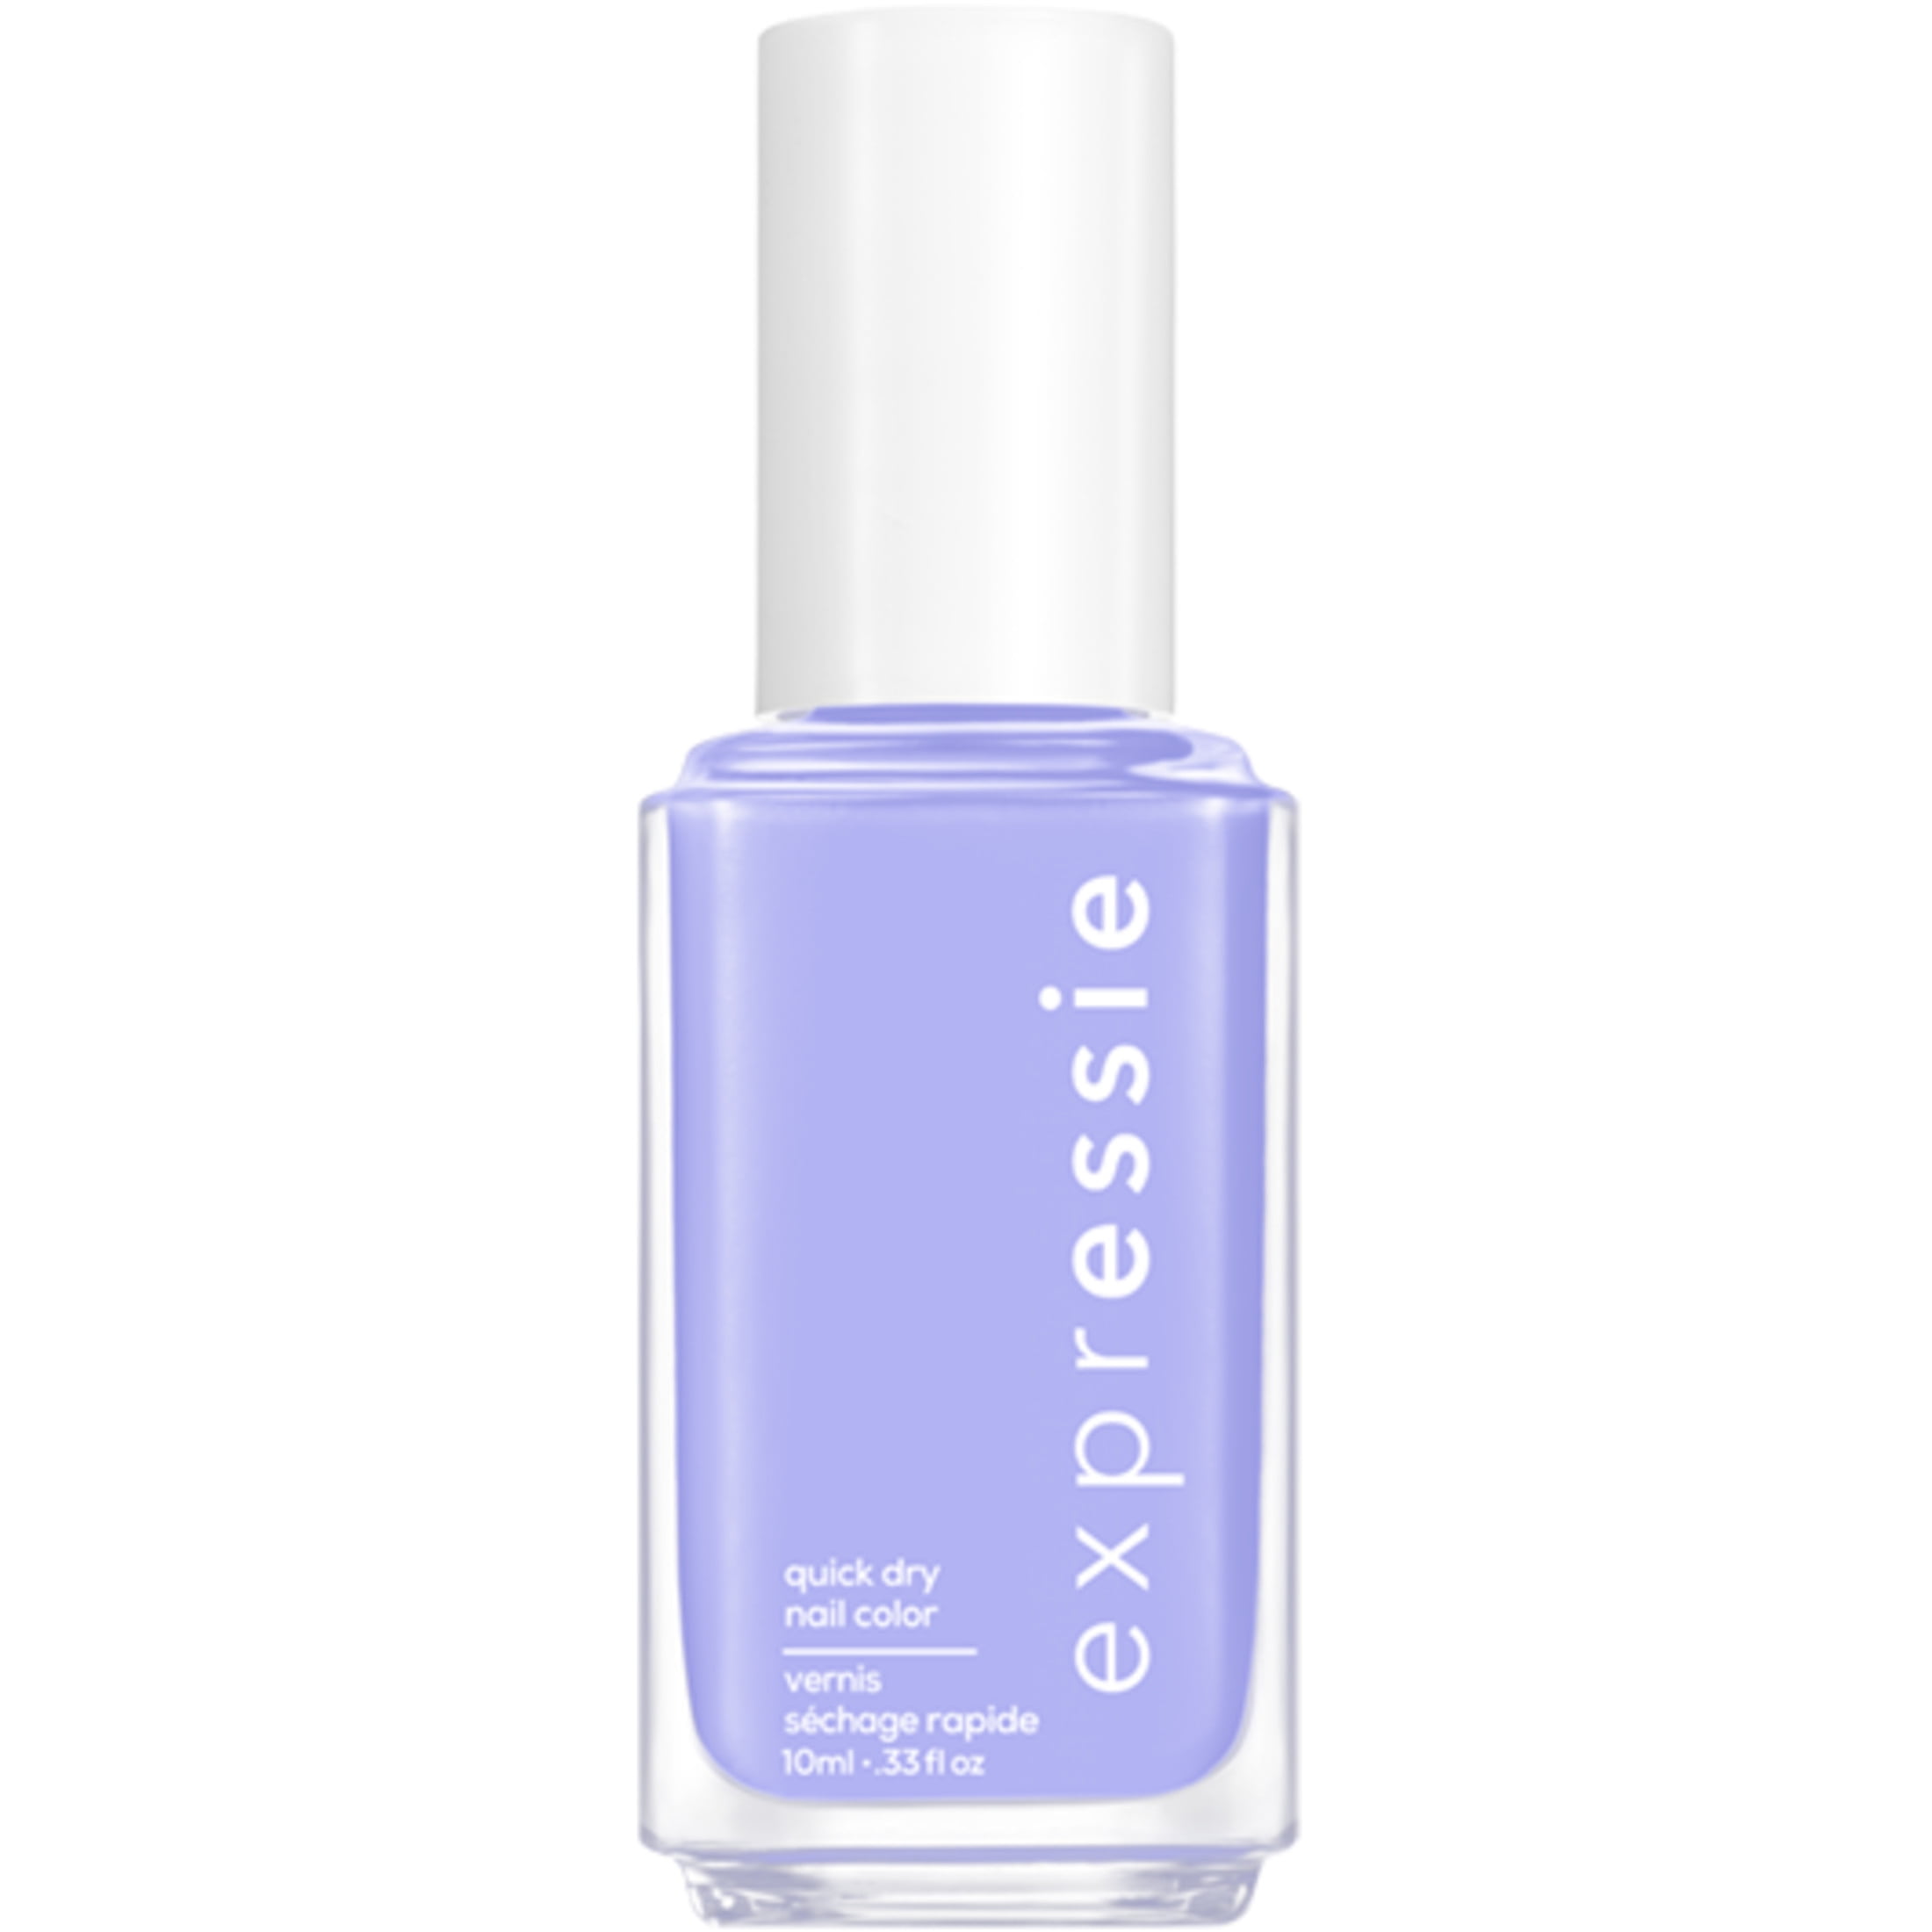 essie Expressie Quick Dry Vegan Nail Polish, Bright Lilac, 0.33 fl oz  Bottle